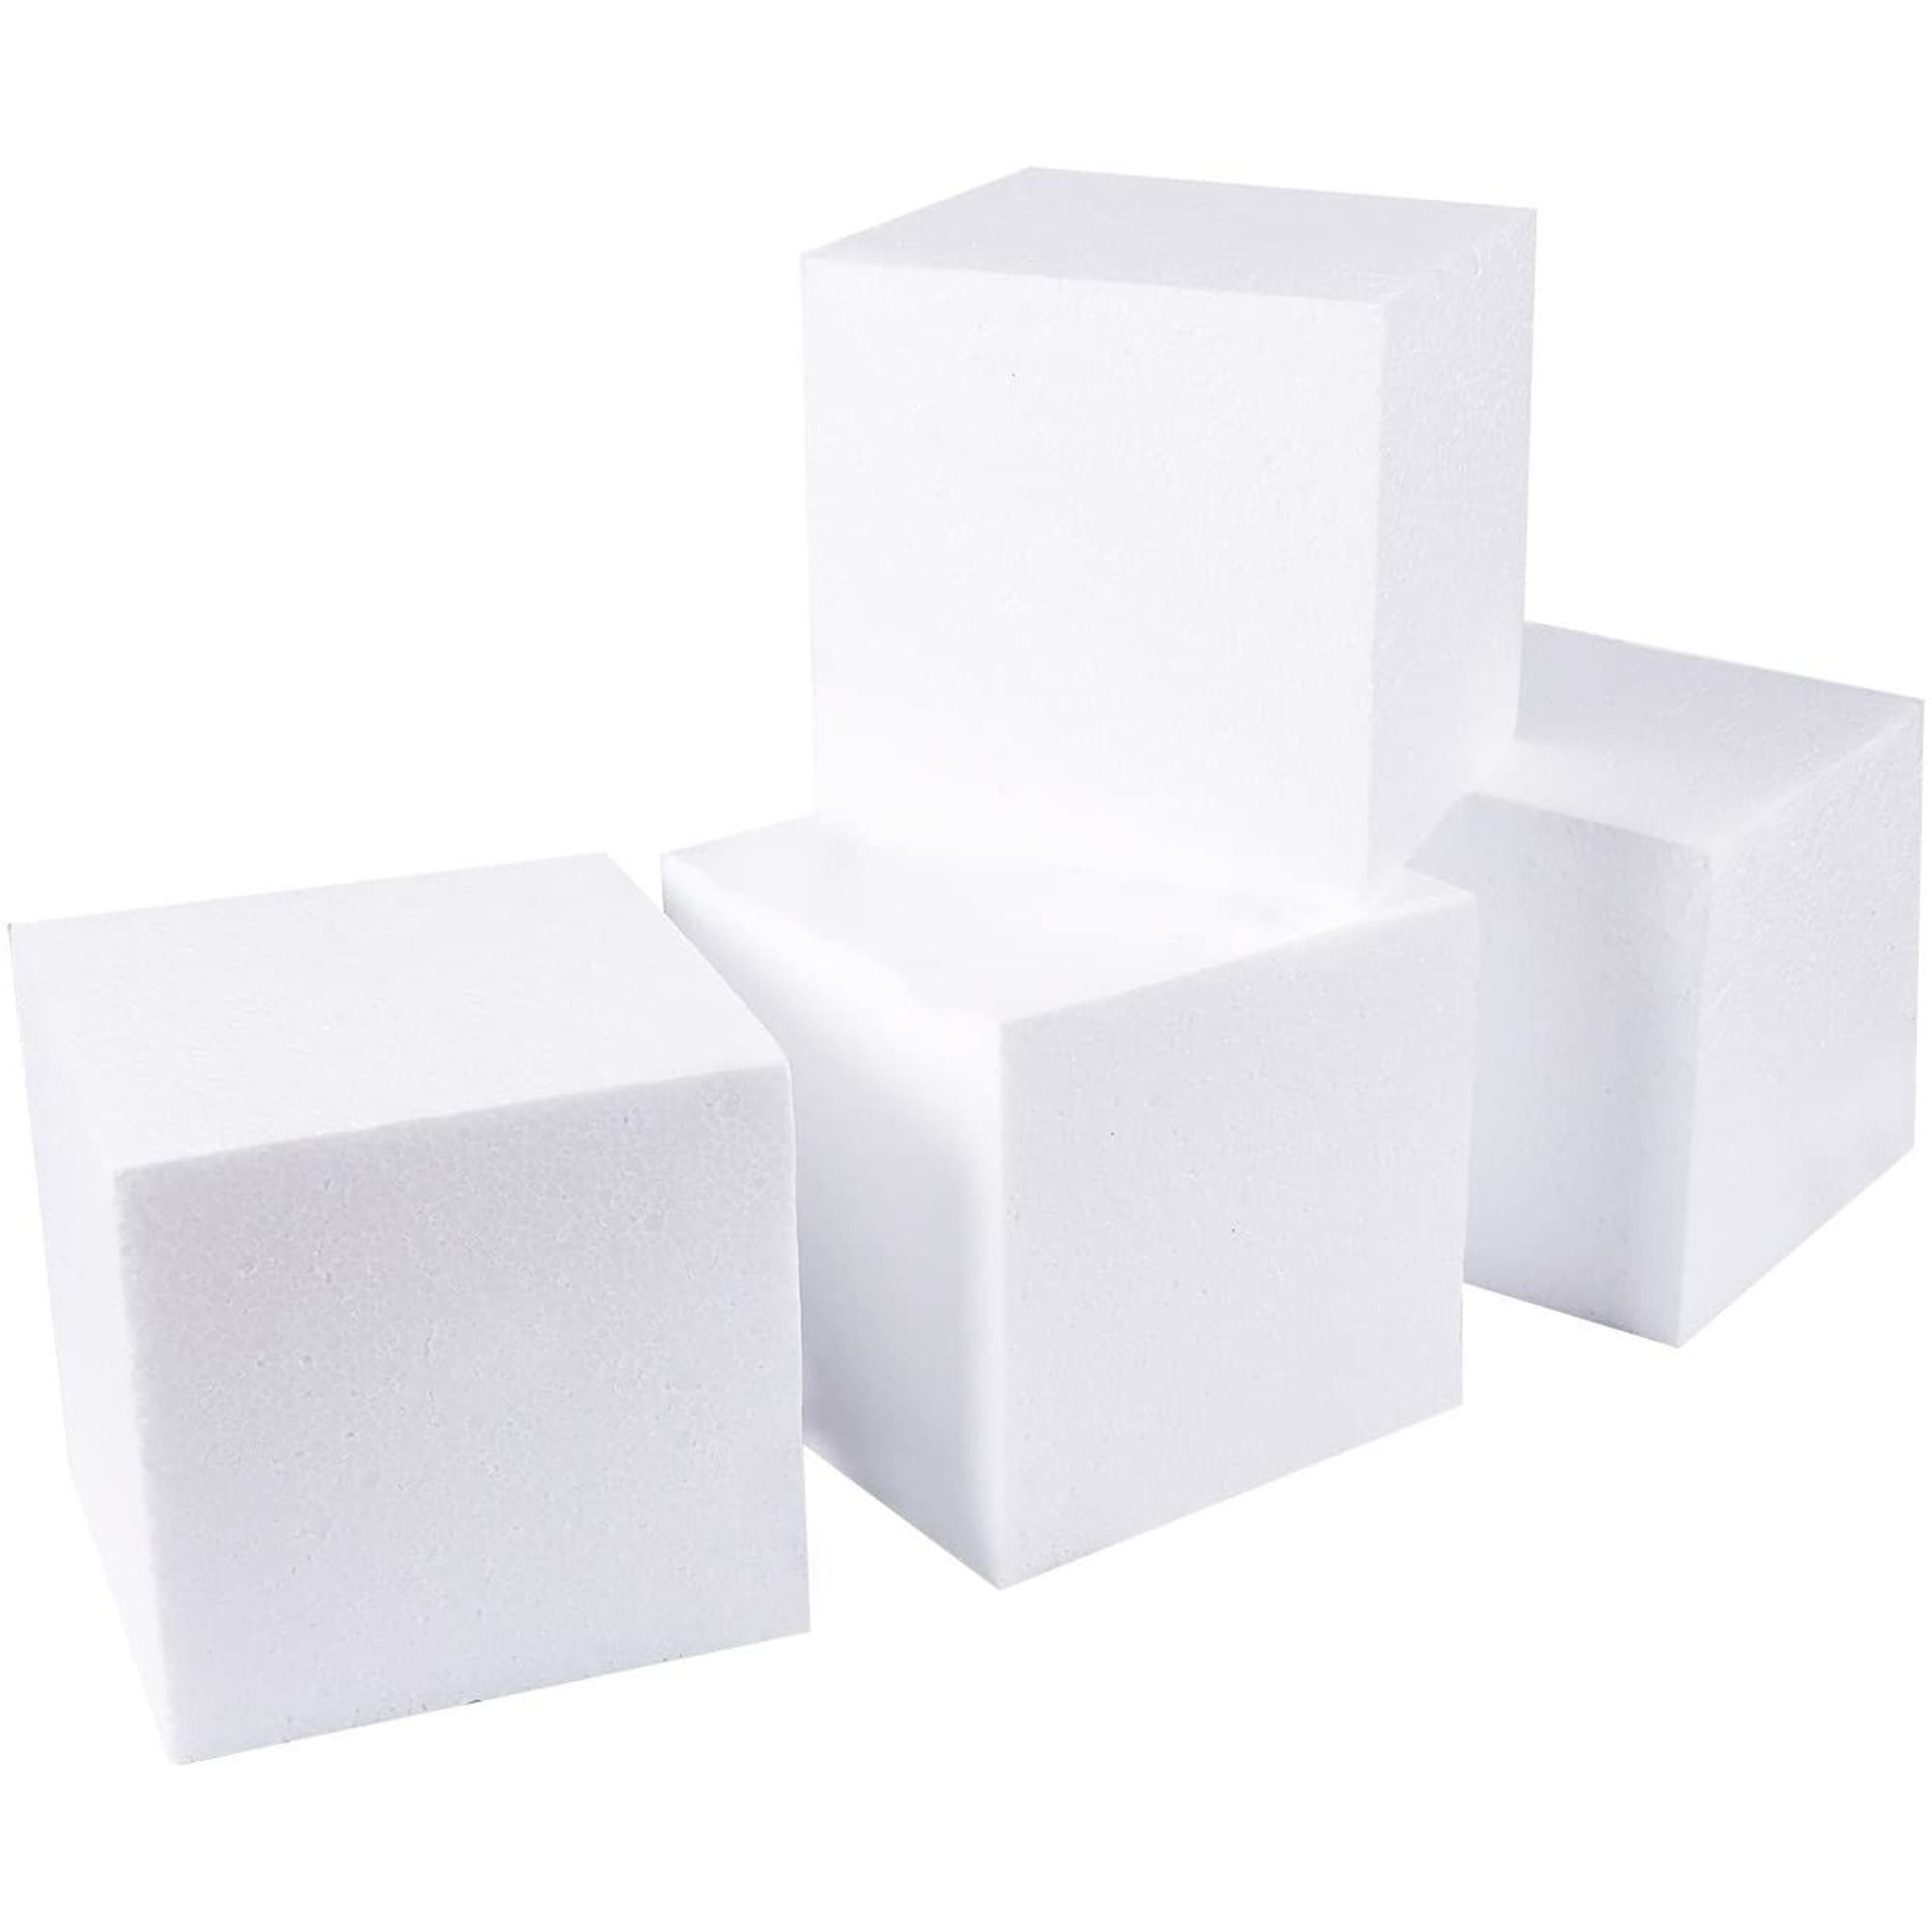 Foam Blocks for Crafts 6 X 6 X 3 pack of 10 2 Bonus Blocks FREE. Free  Shipping 